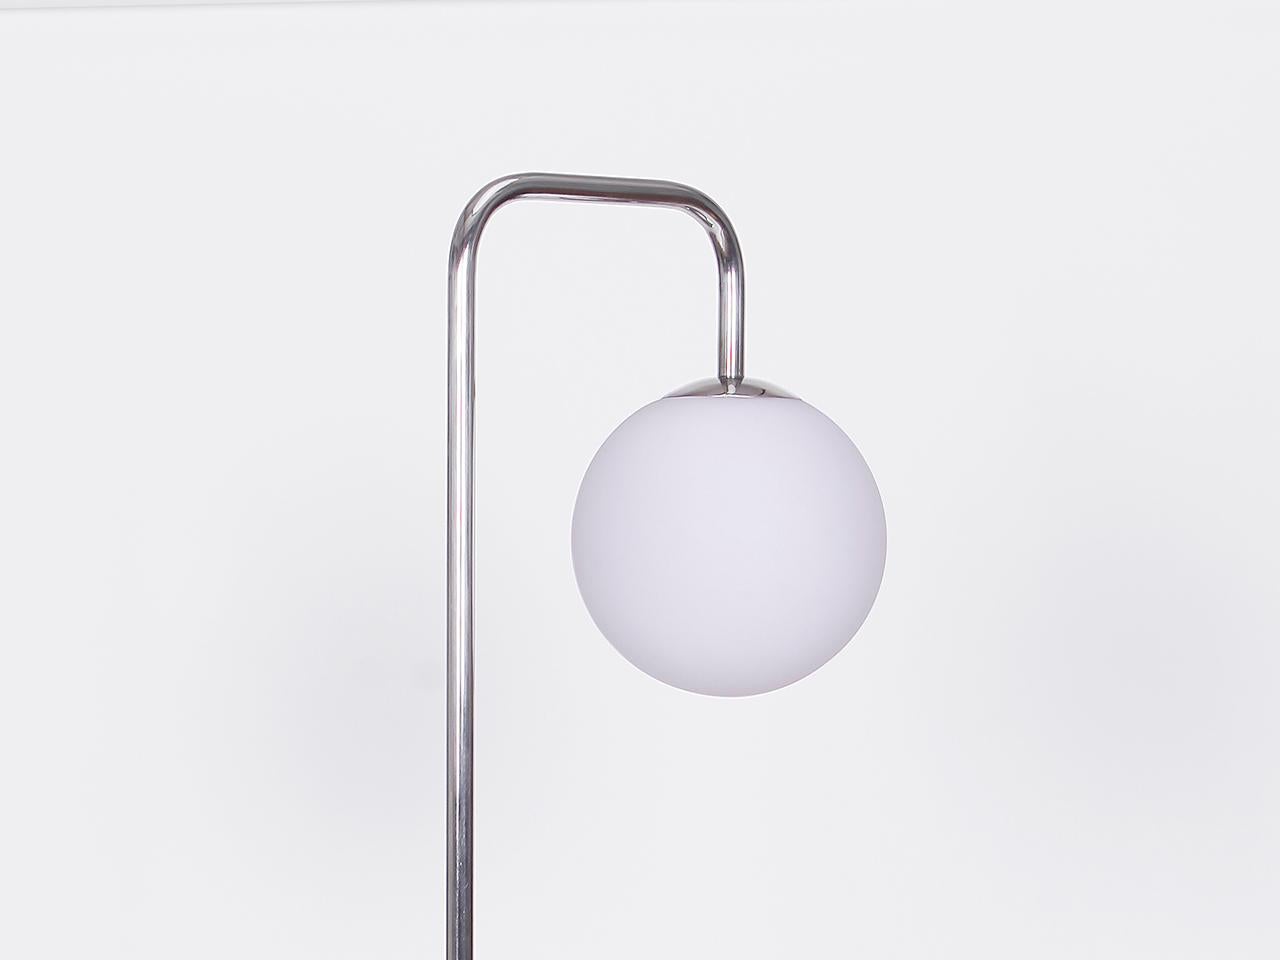 Czech Tubular Steel Lamp Bauhaus Functionalism Contemporary For Sale